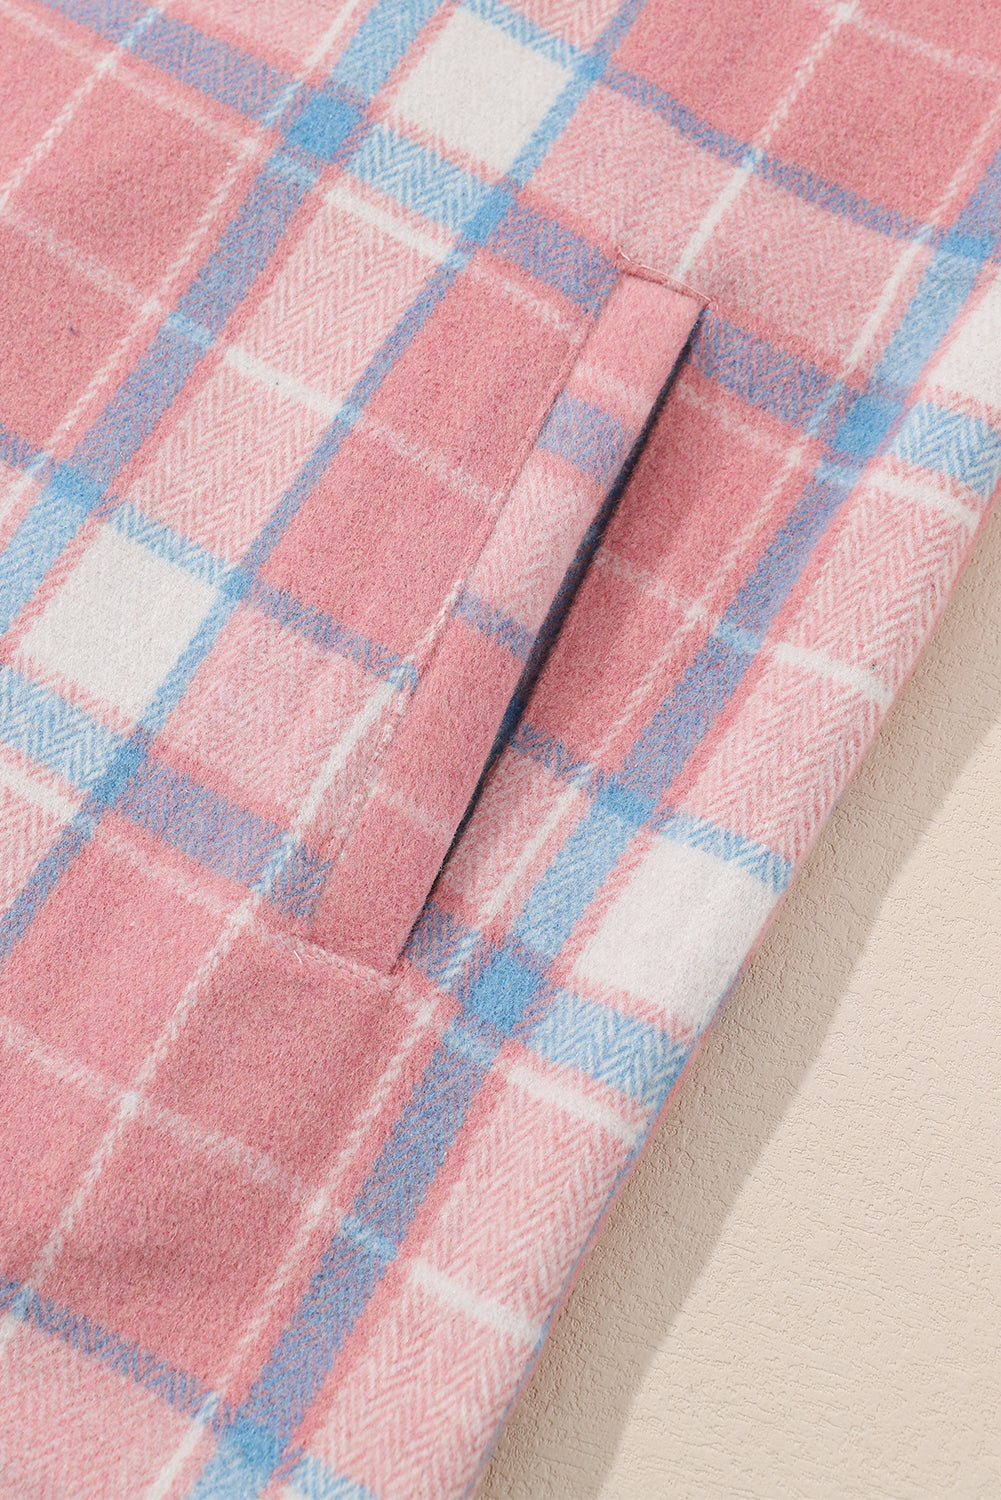 Pink Plaid Flap Pocket Flannel Shacket